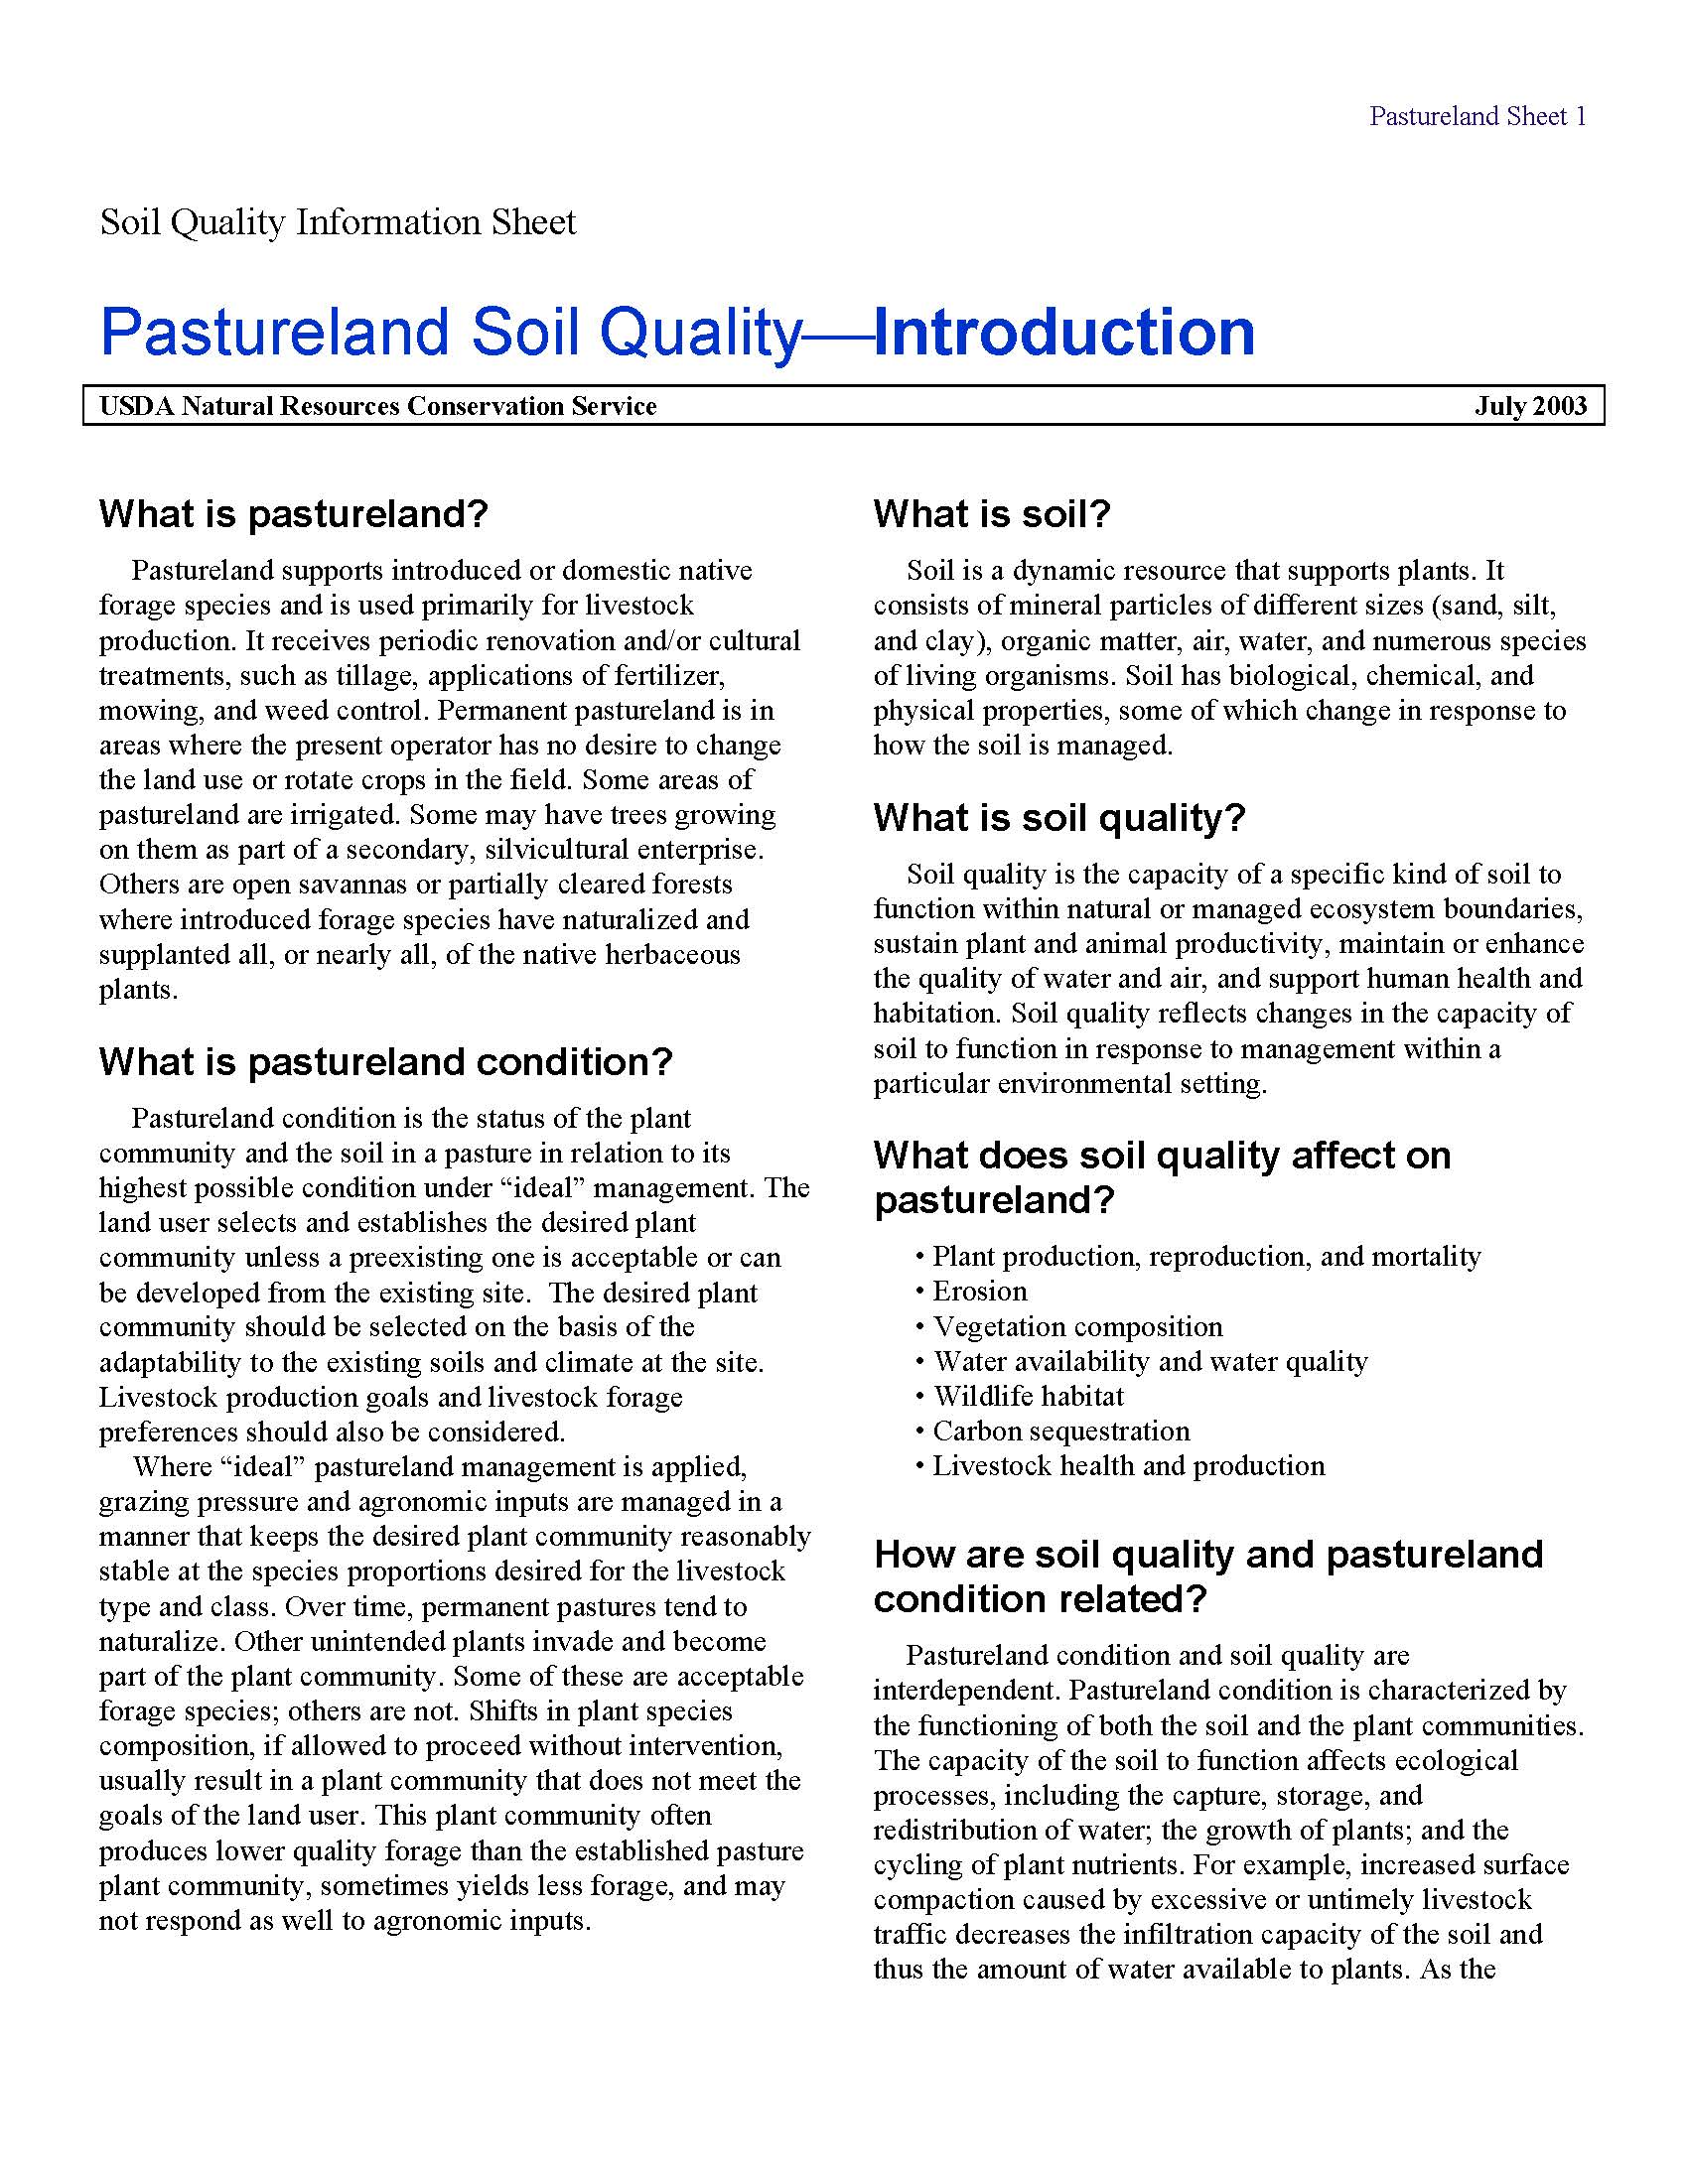 SQ-Pastureland Soil Quality-Introduction